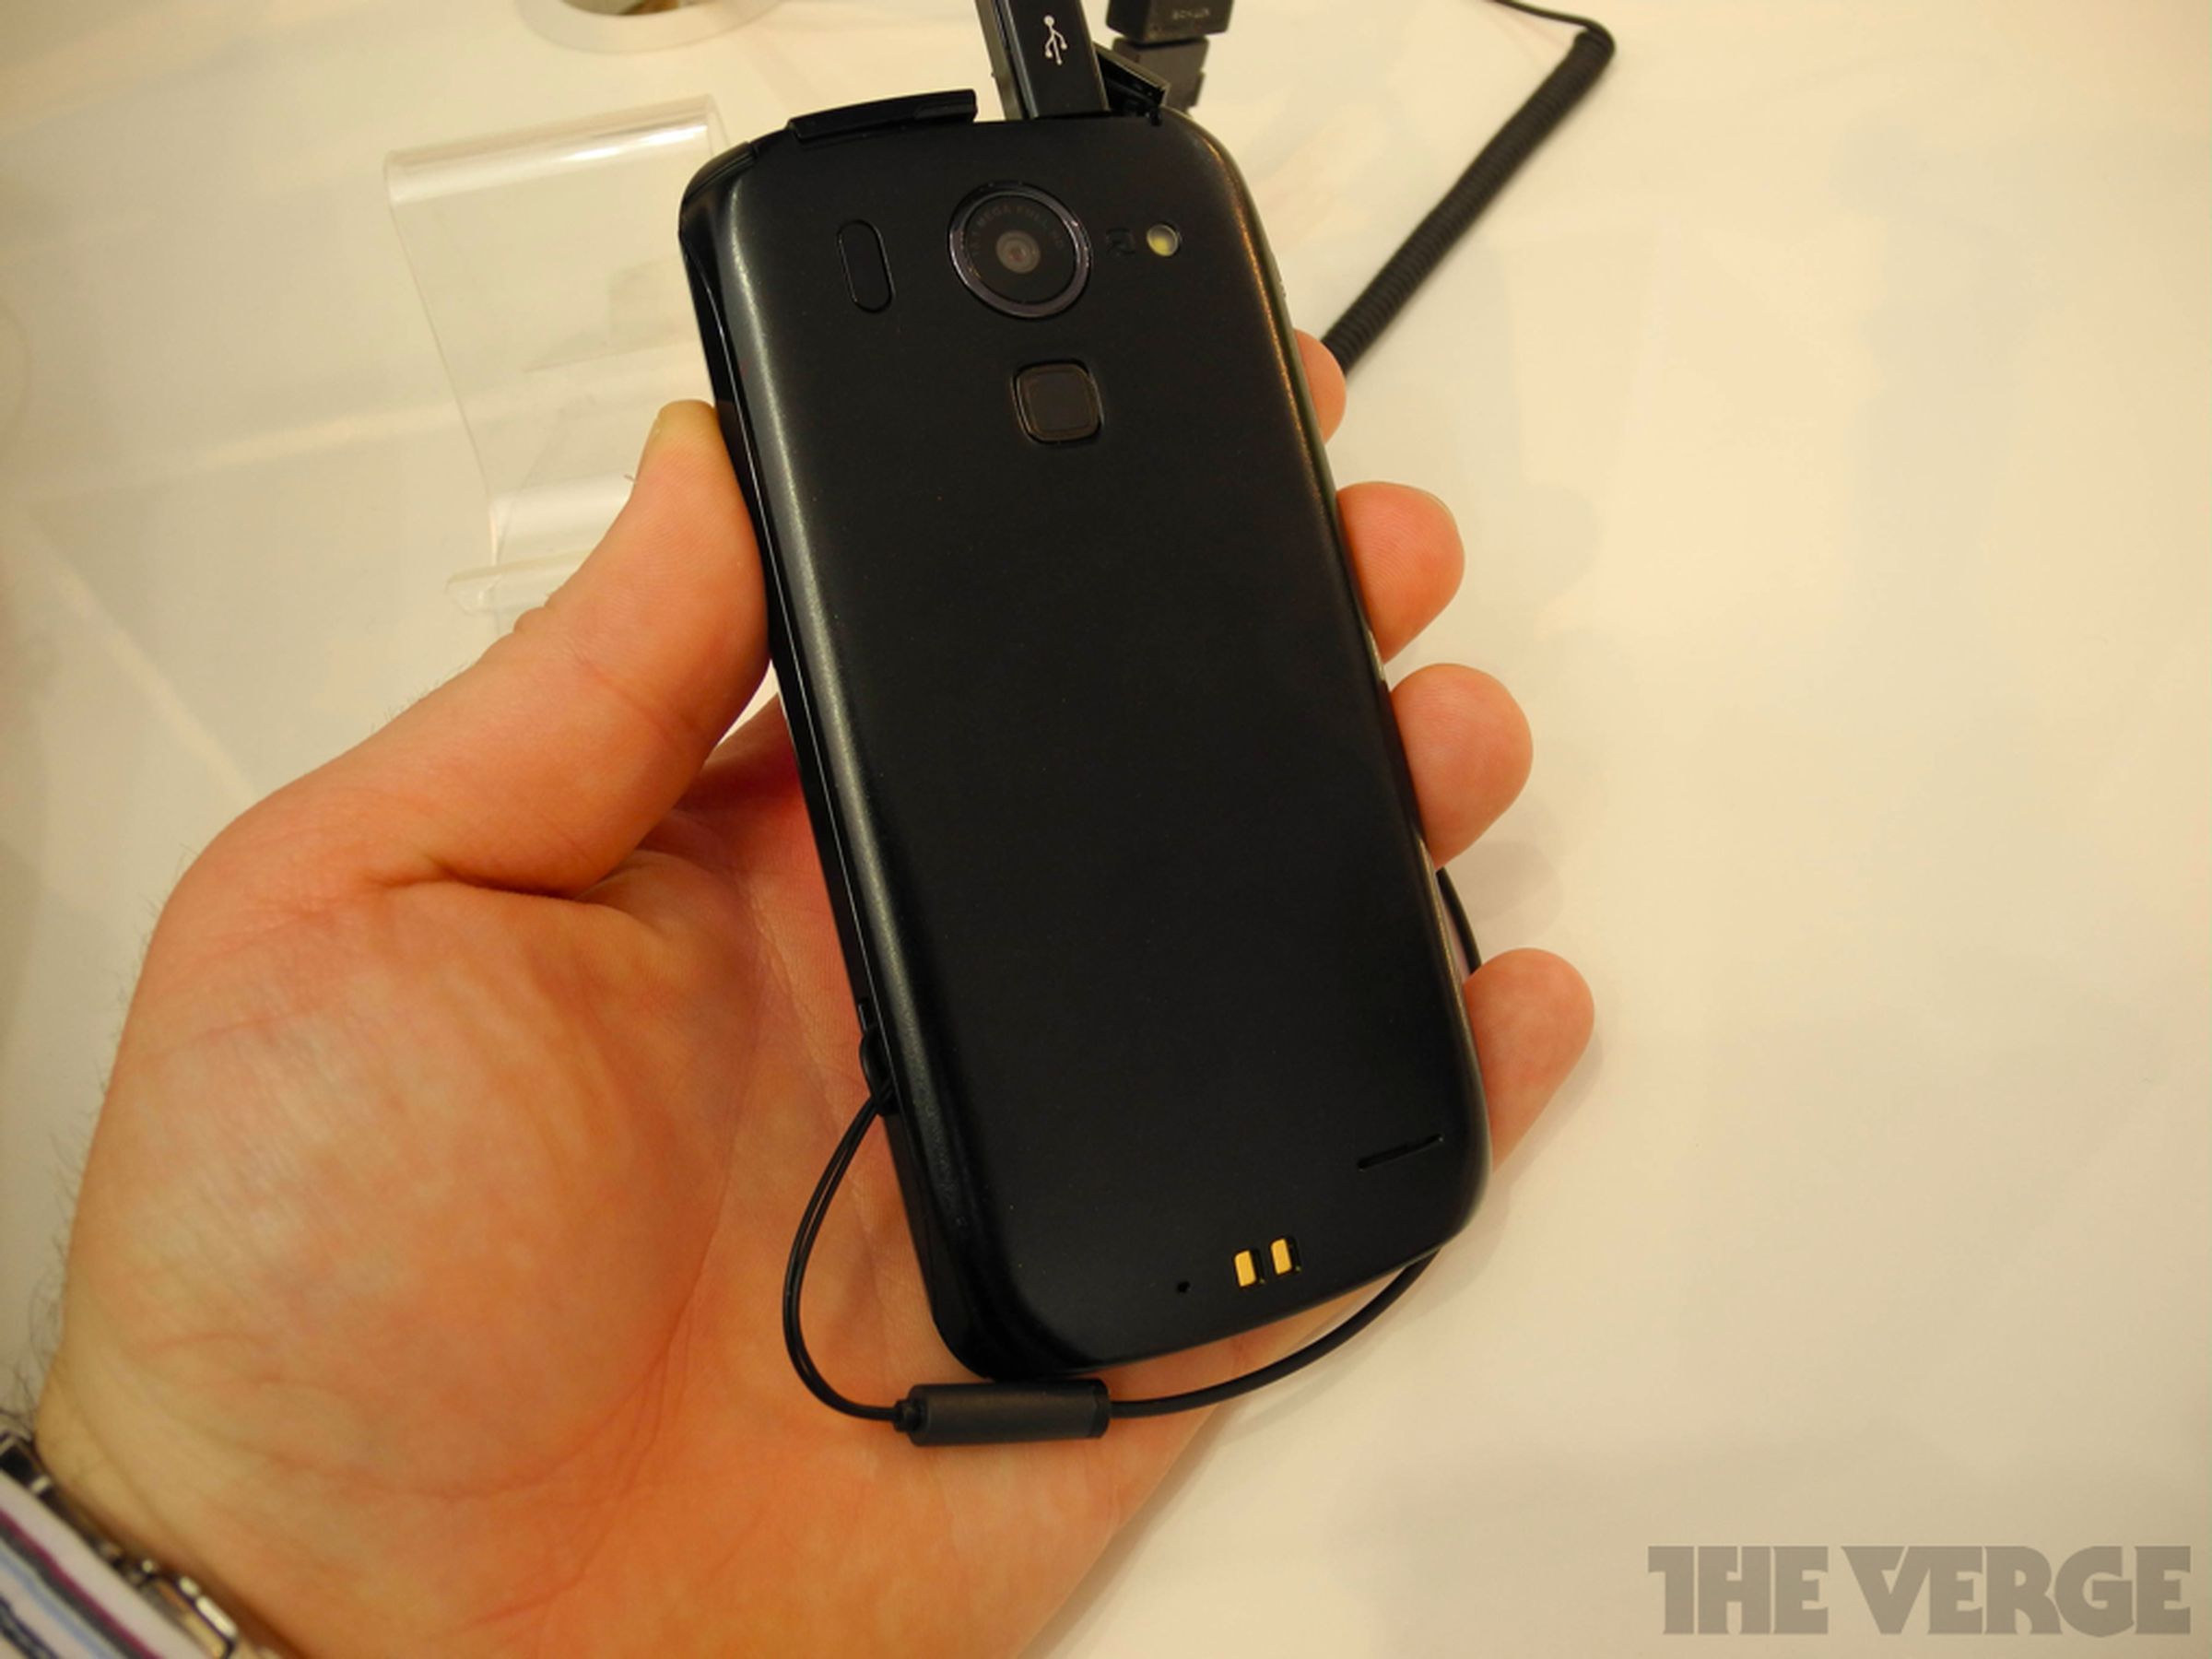 Fujitsu quad-core Tegra 3 prototype Android phone hands-on photos